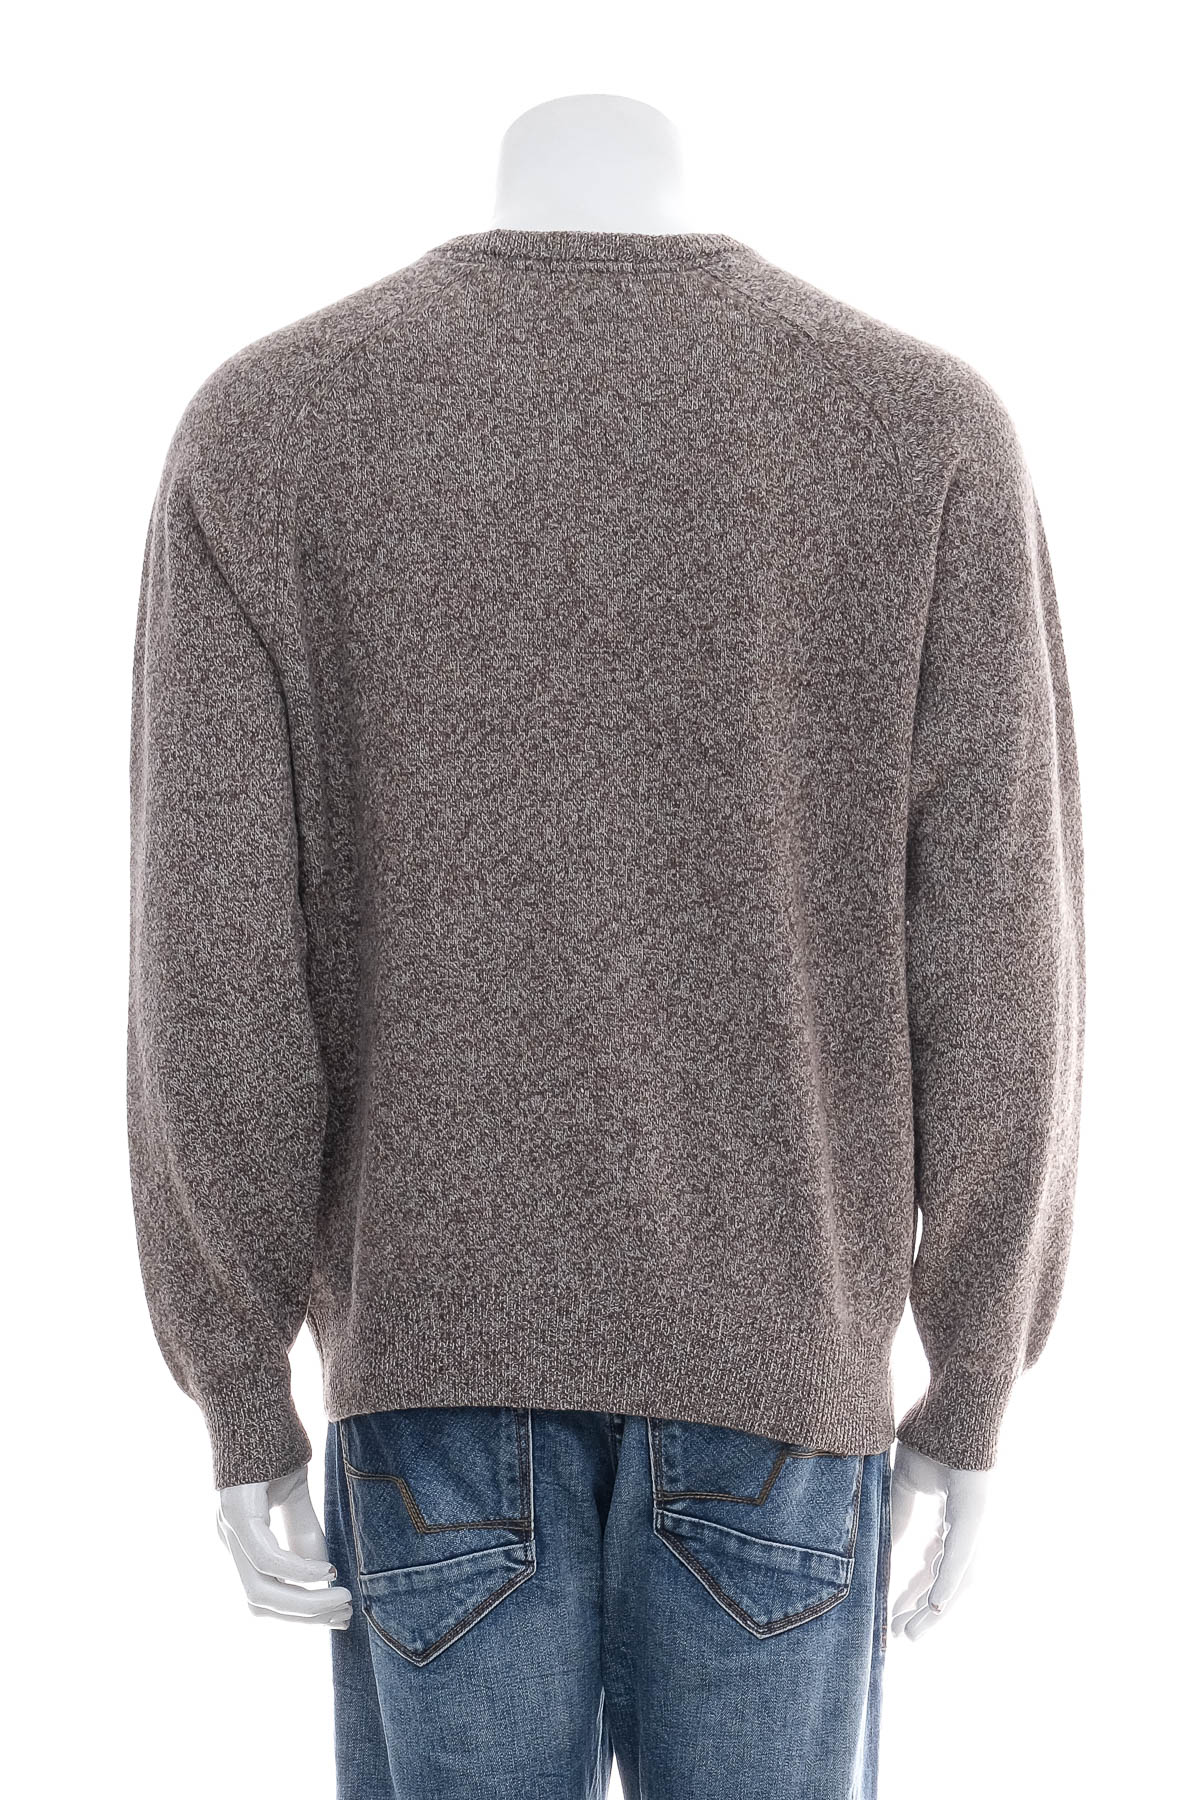 Men's sweater - GAZMAN - 1